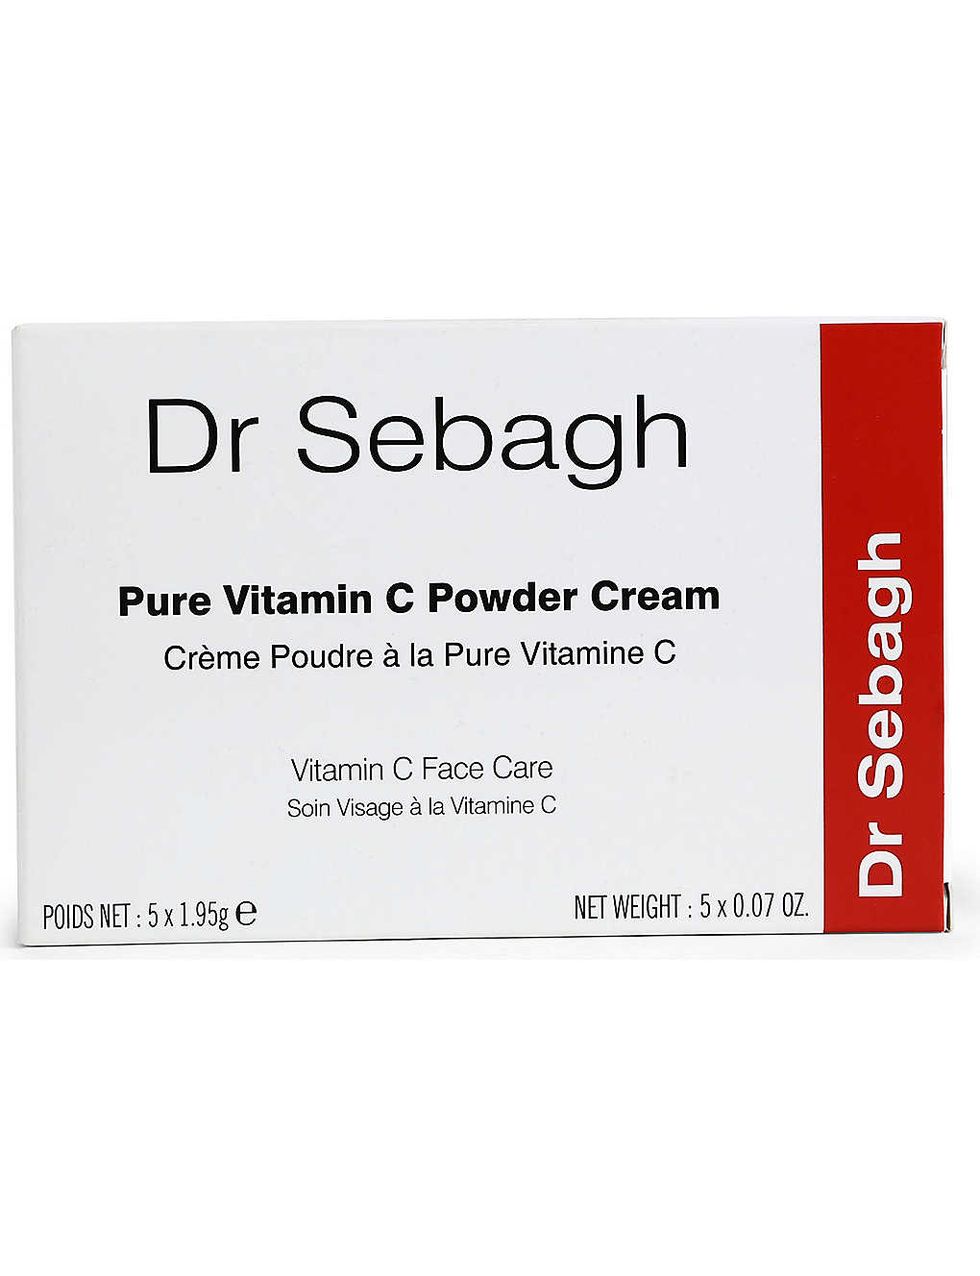 DR SEBAGH Pure Vitamin C powder cream